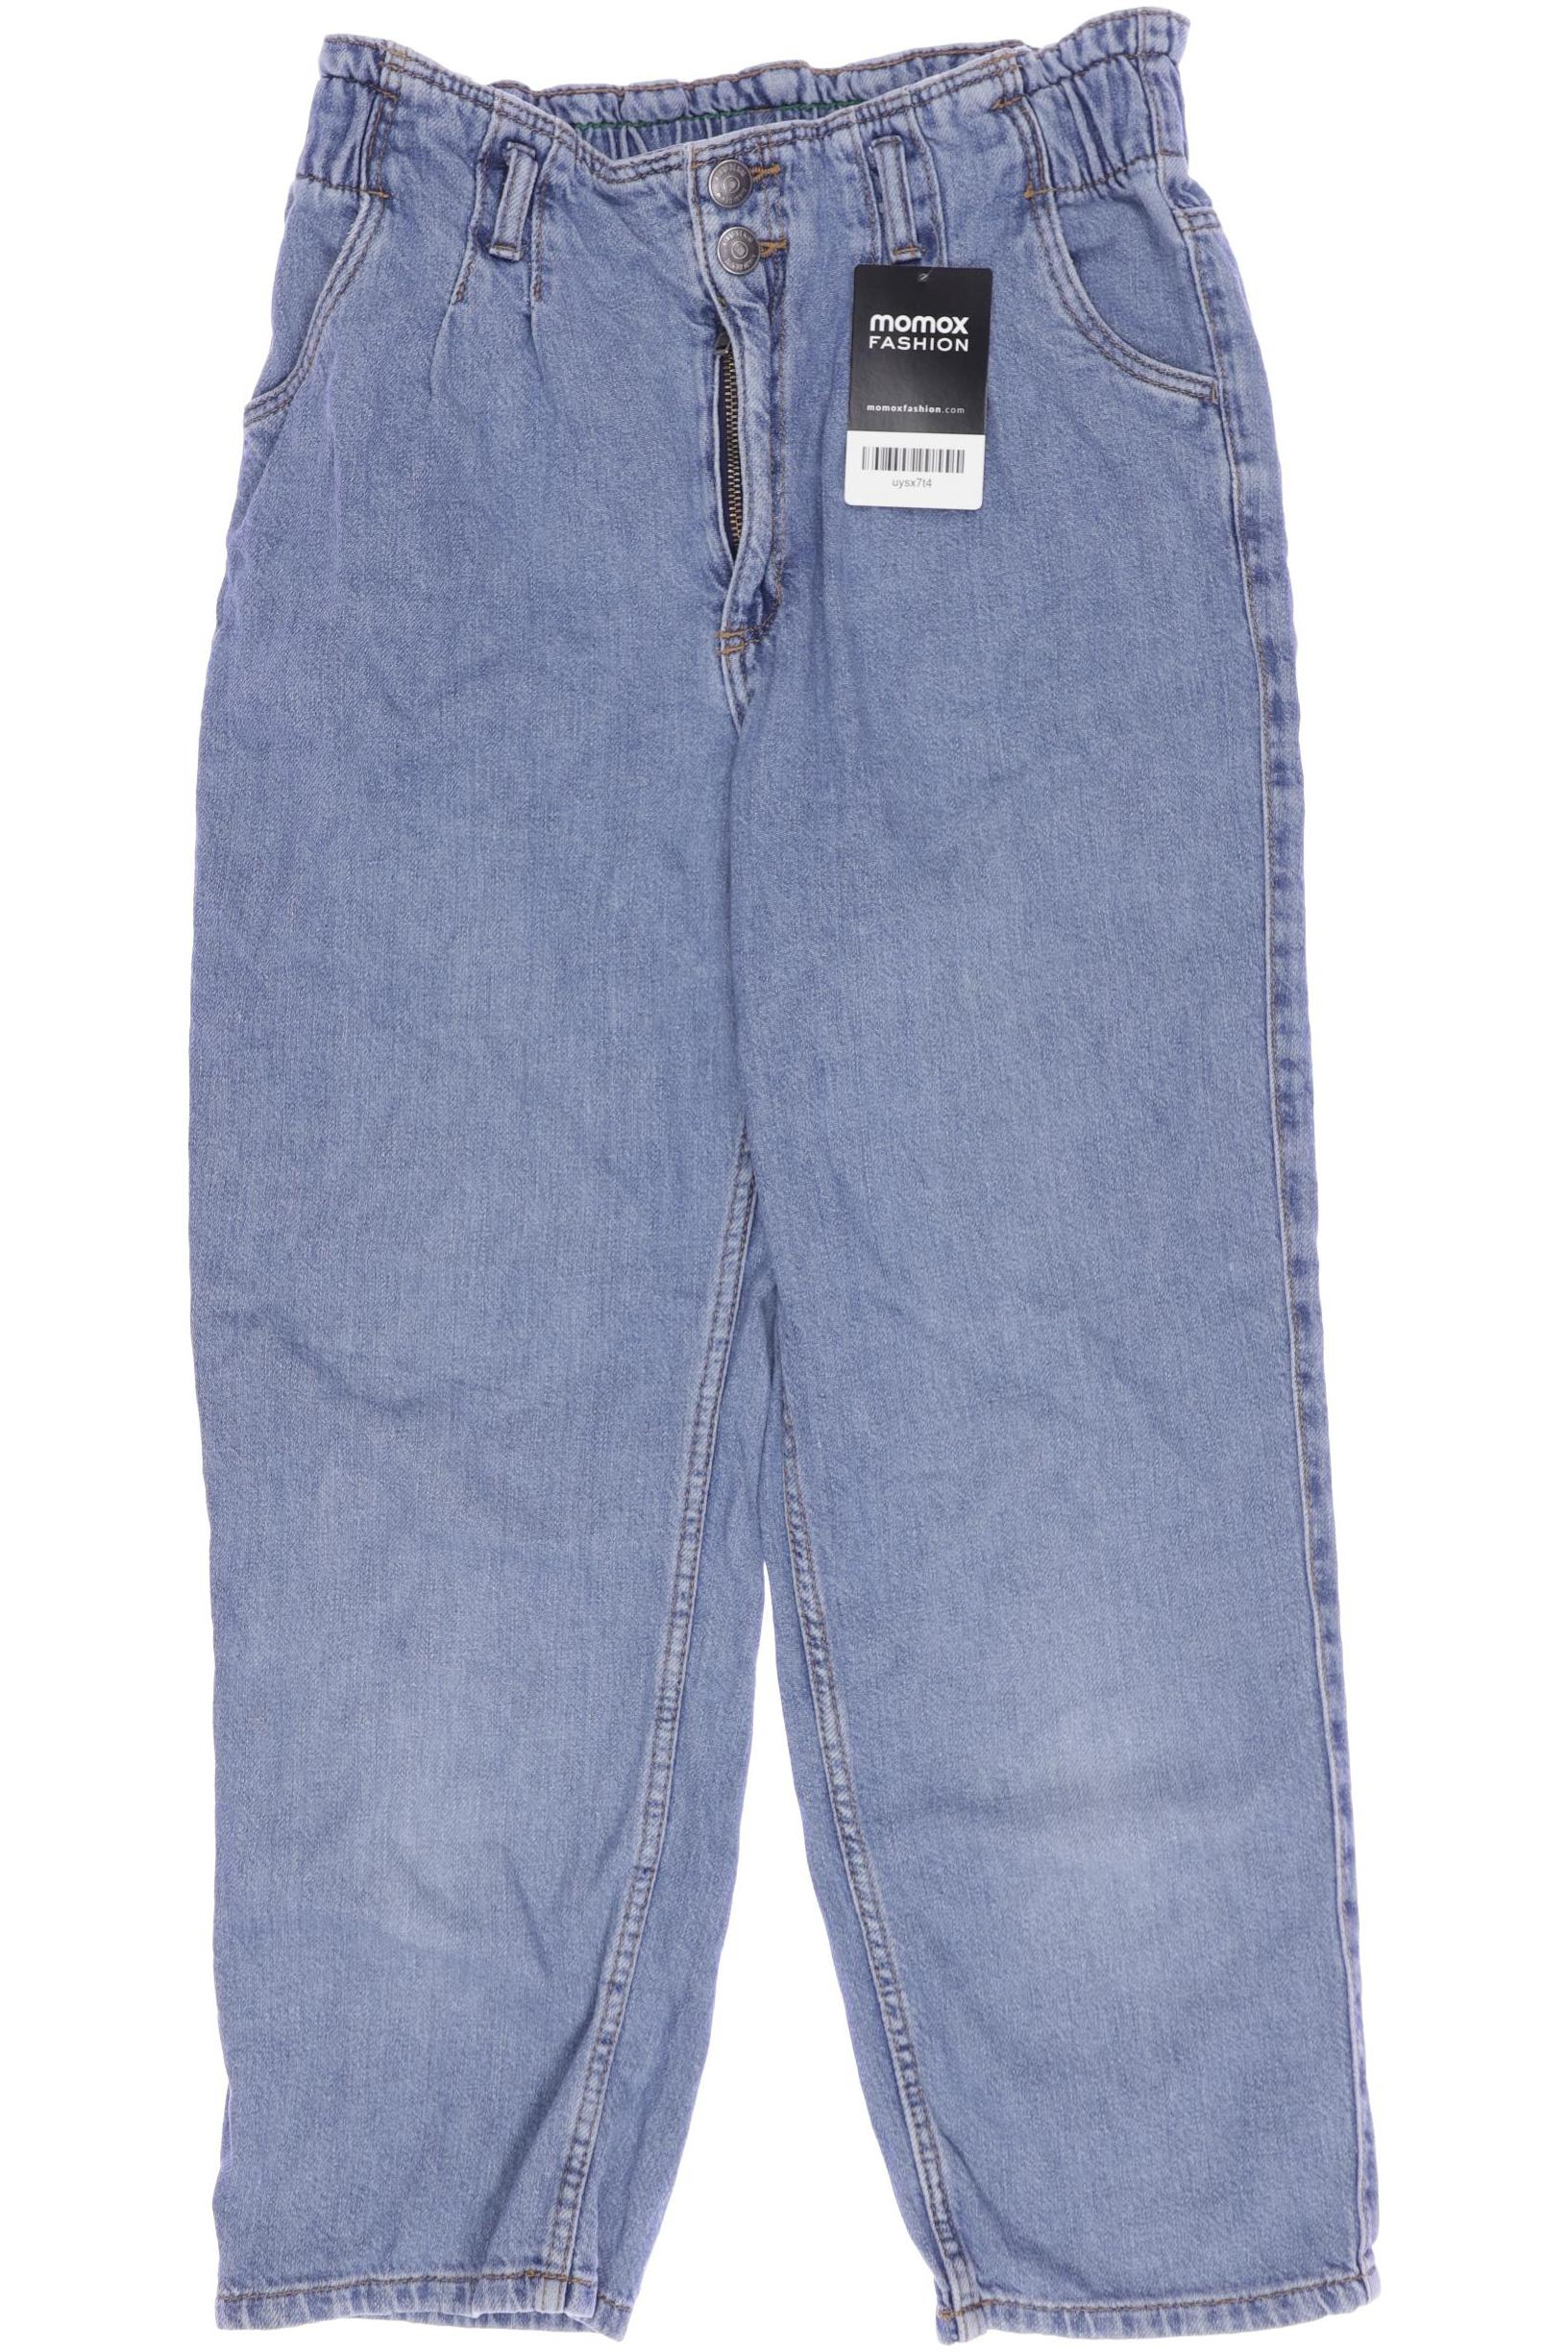 Kiabi Damen Jeans, blau, Gr. 146 von Kiabi